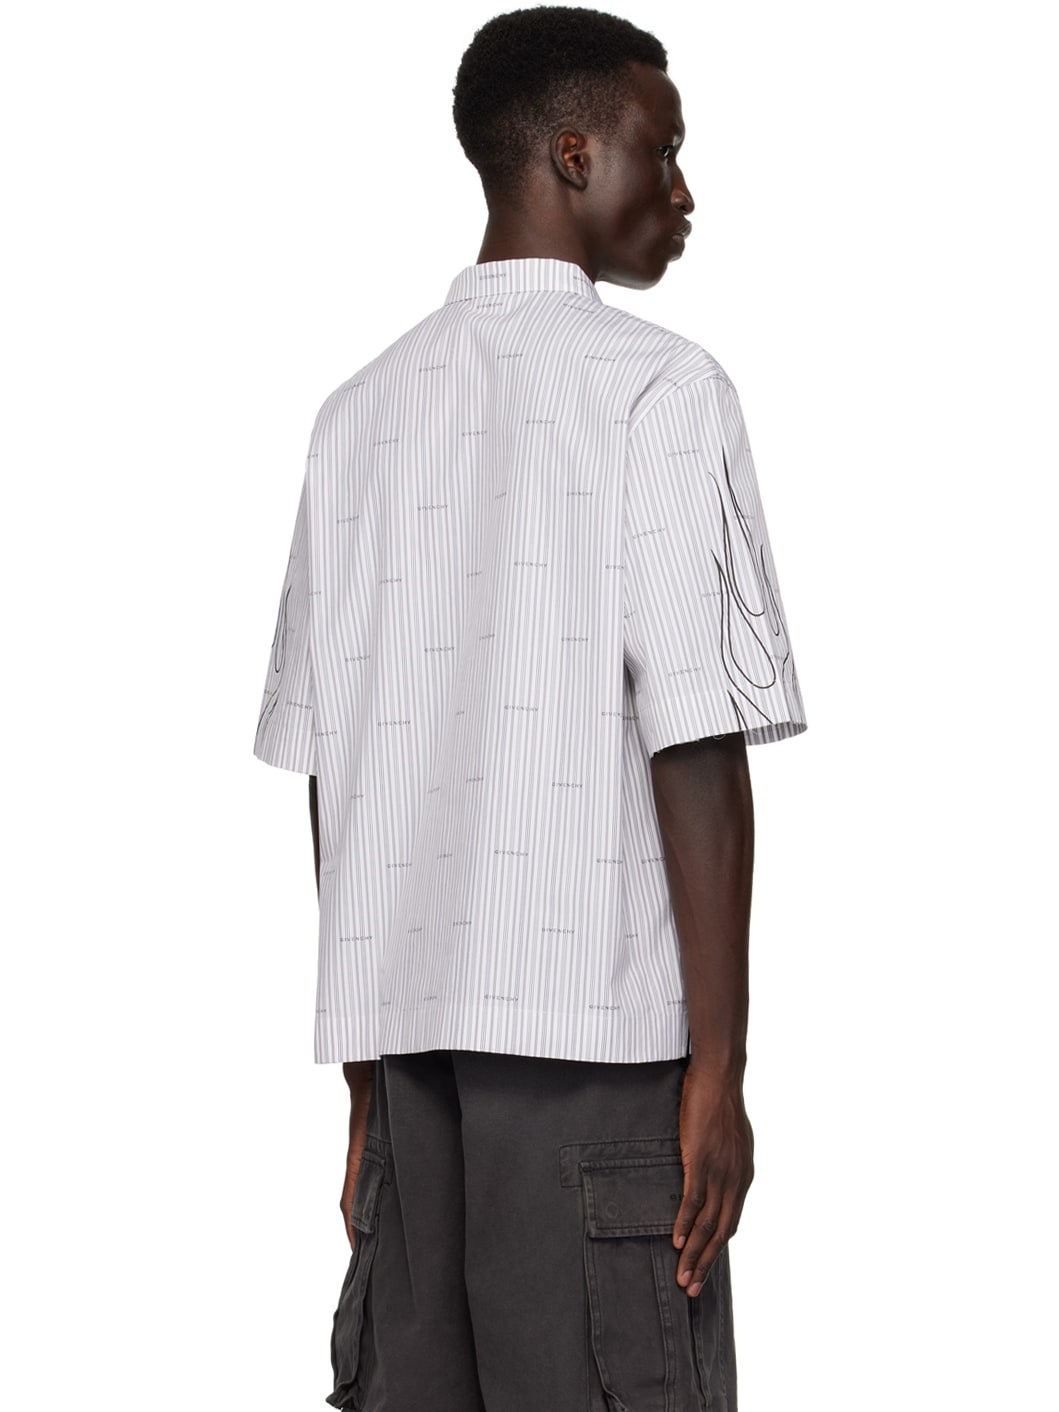 White & Gray Striped Shirt - 3